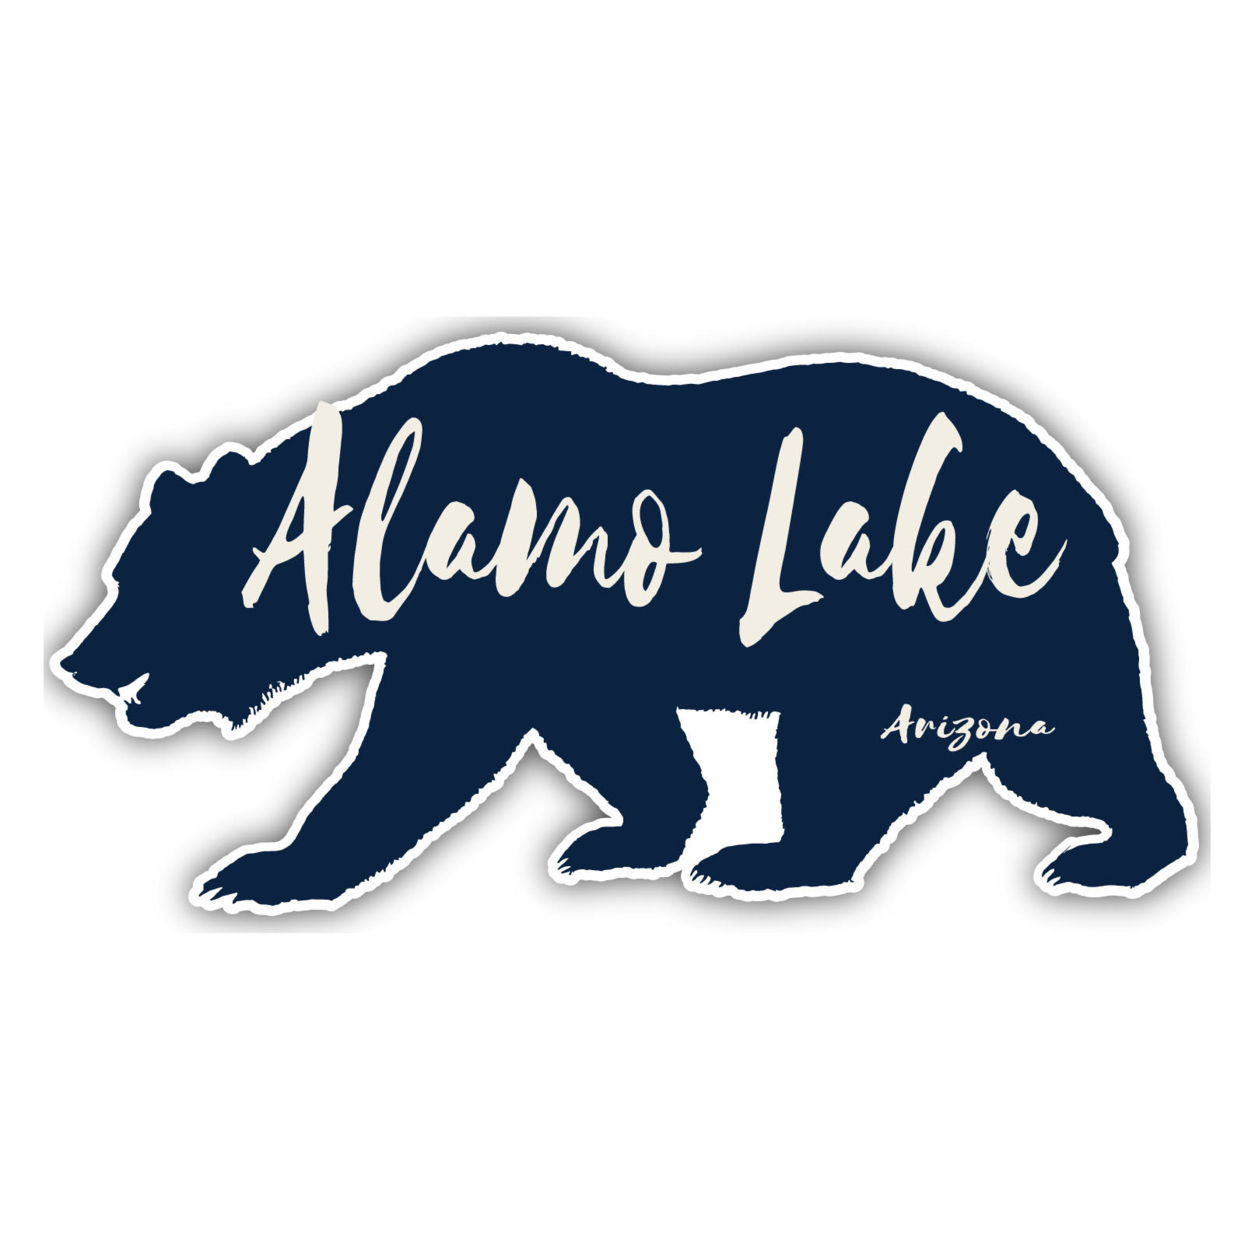 Alamo Lake Arizona Souvenir Decorative Stickers (Choose Theme And Size) - Single Unit, 6-Inch, Camp Life